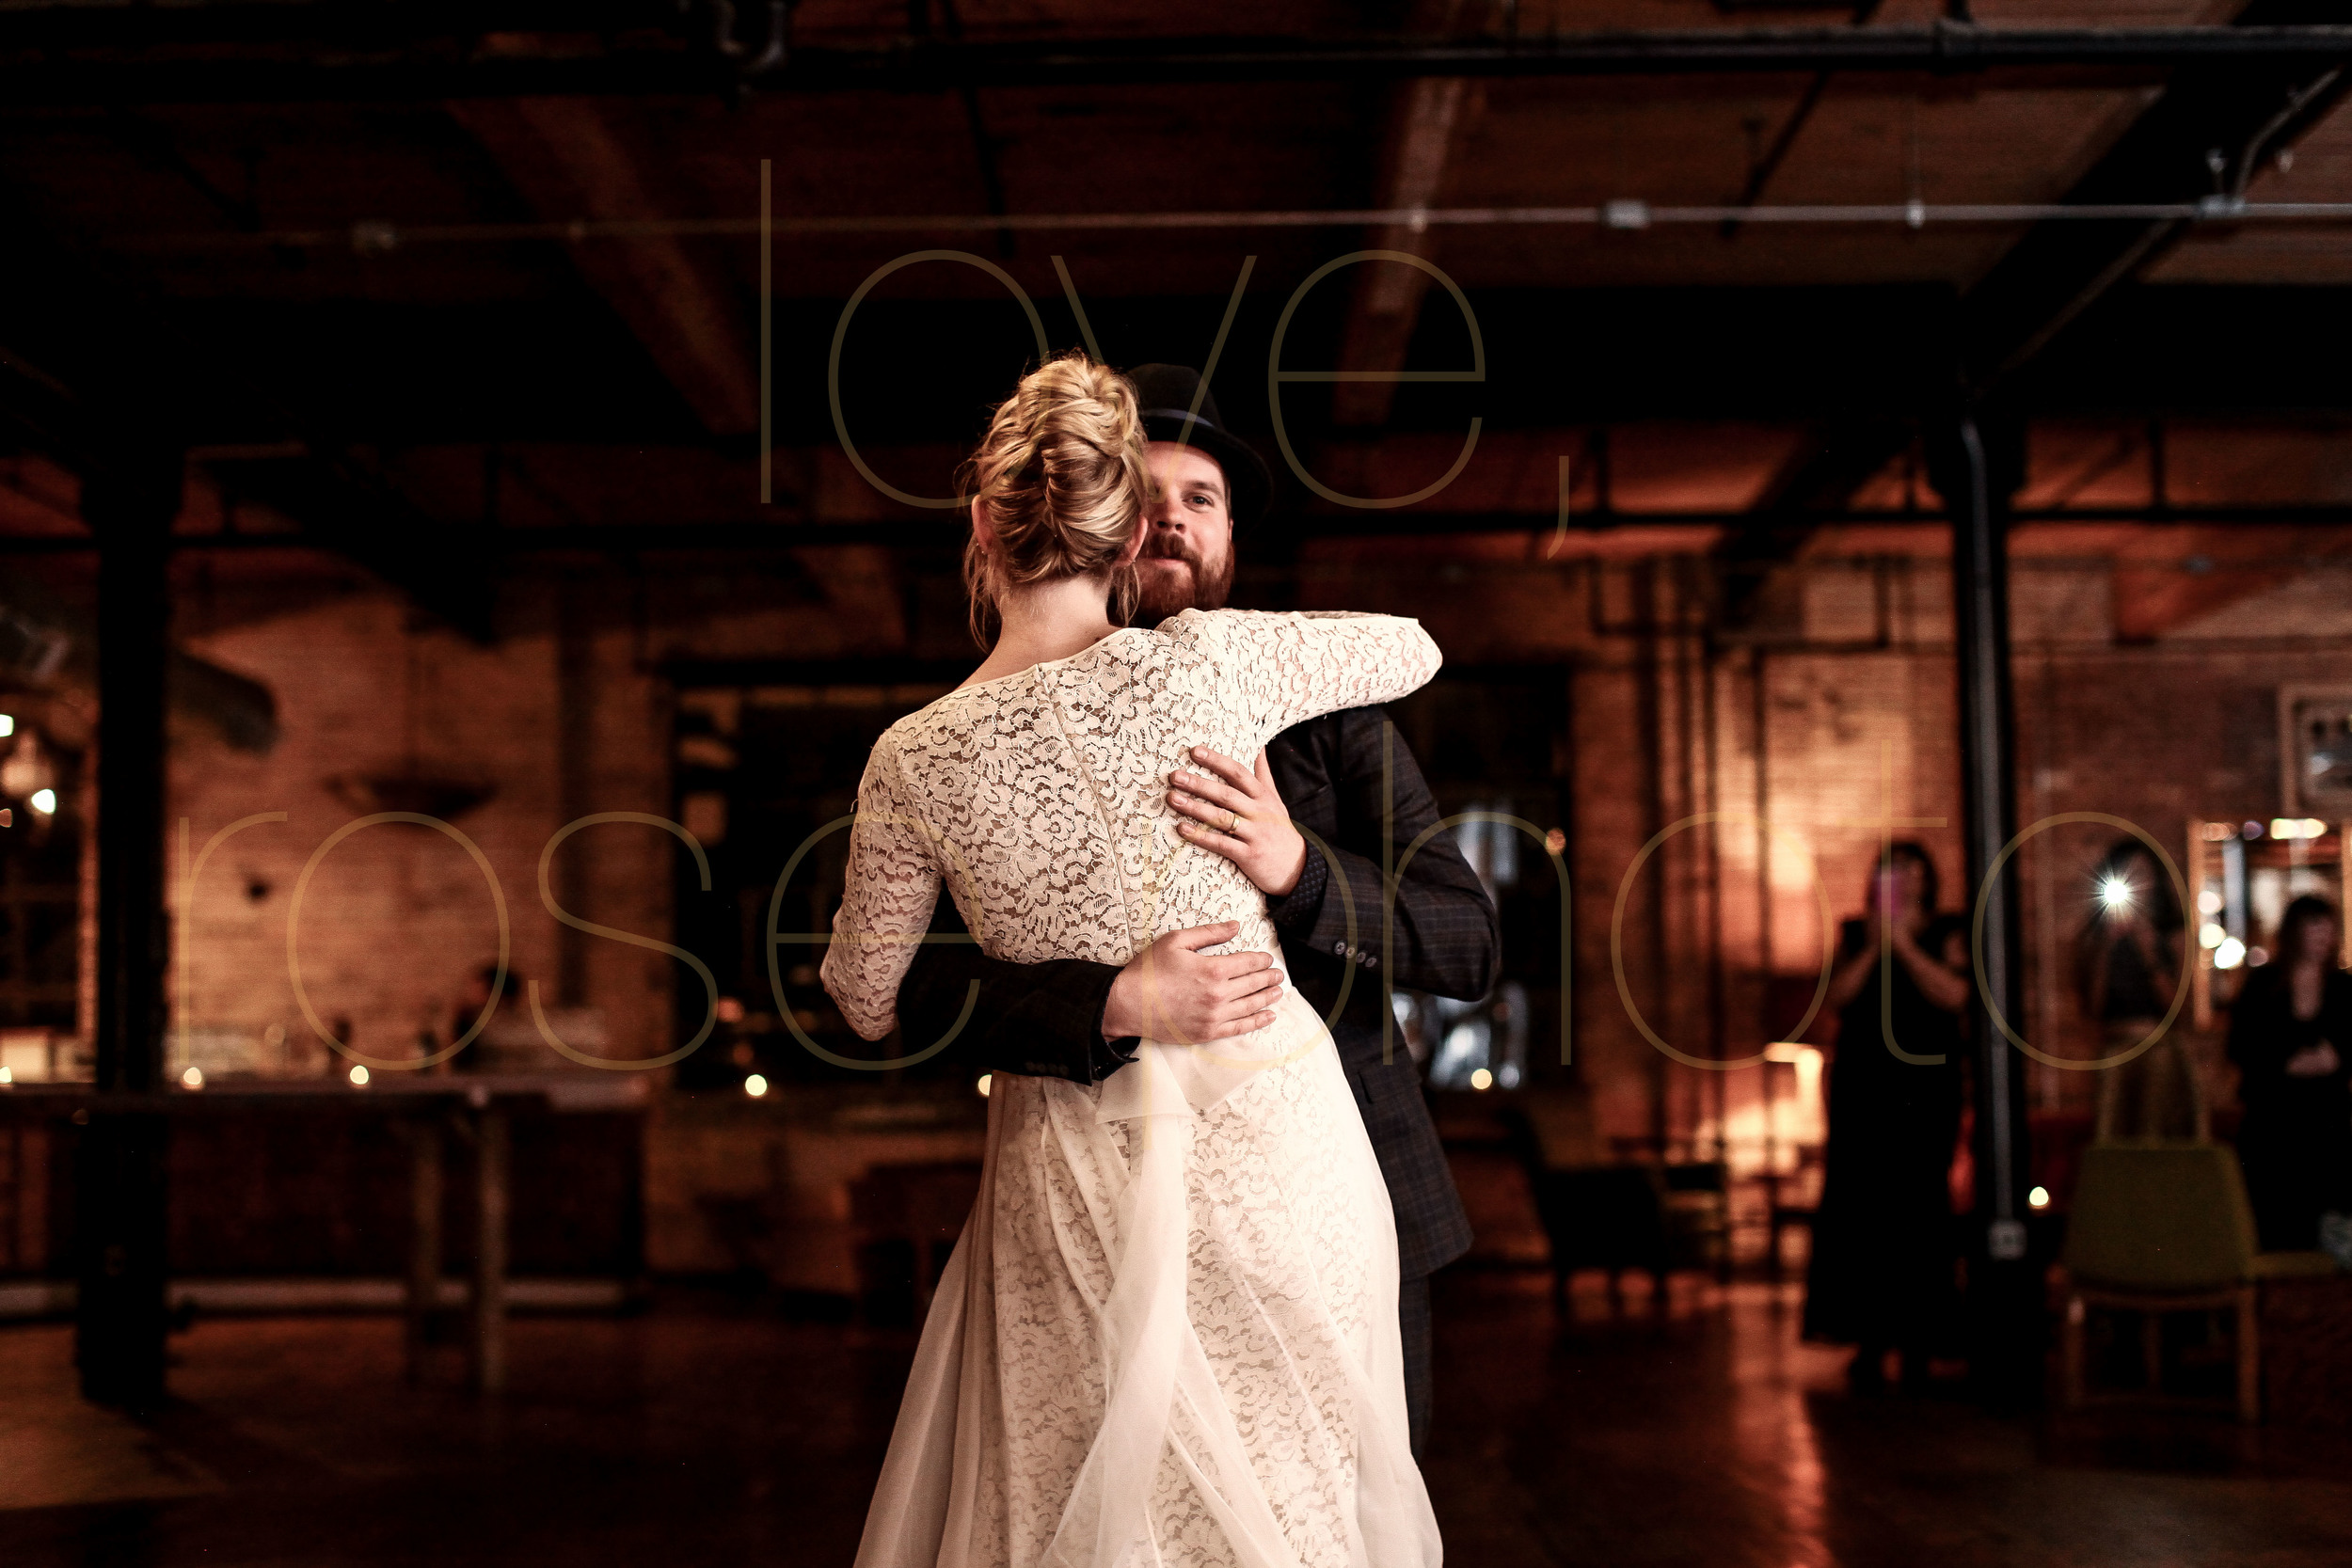 West Fulton Chicago Wedding Venue Salvage One photography enagement photos bride groom first dance-32.jpg